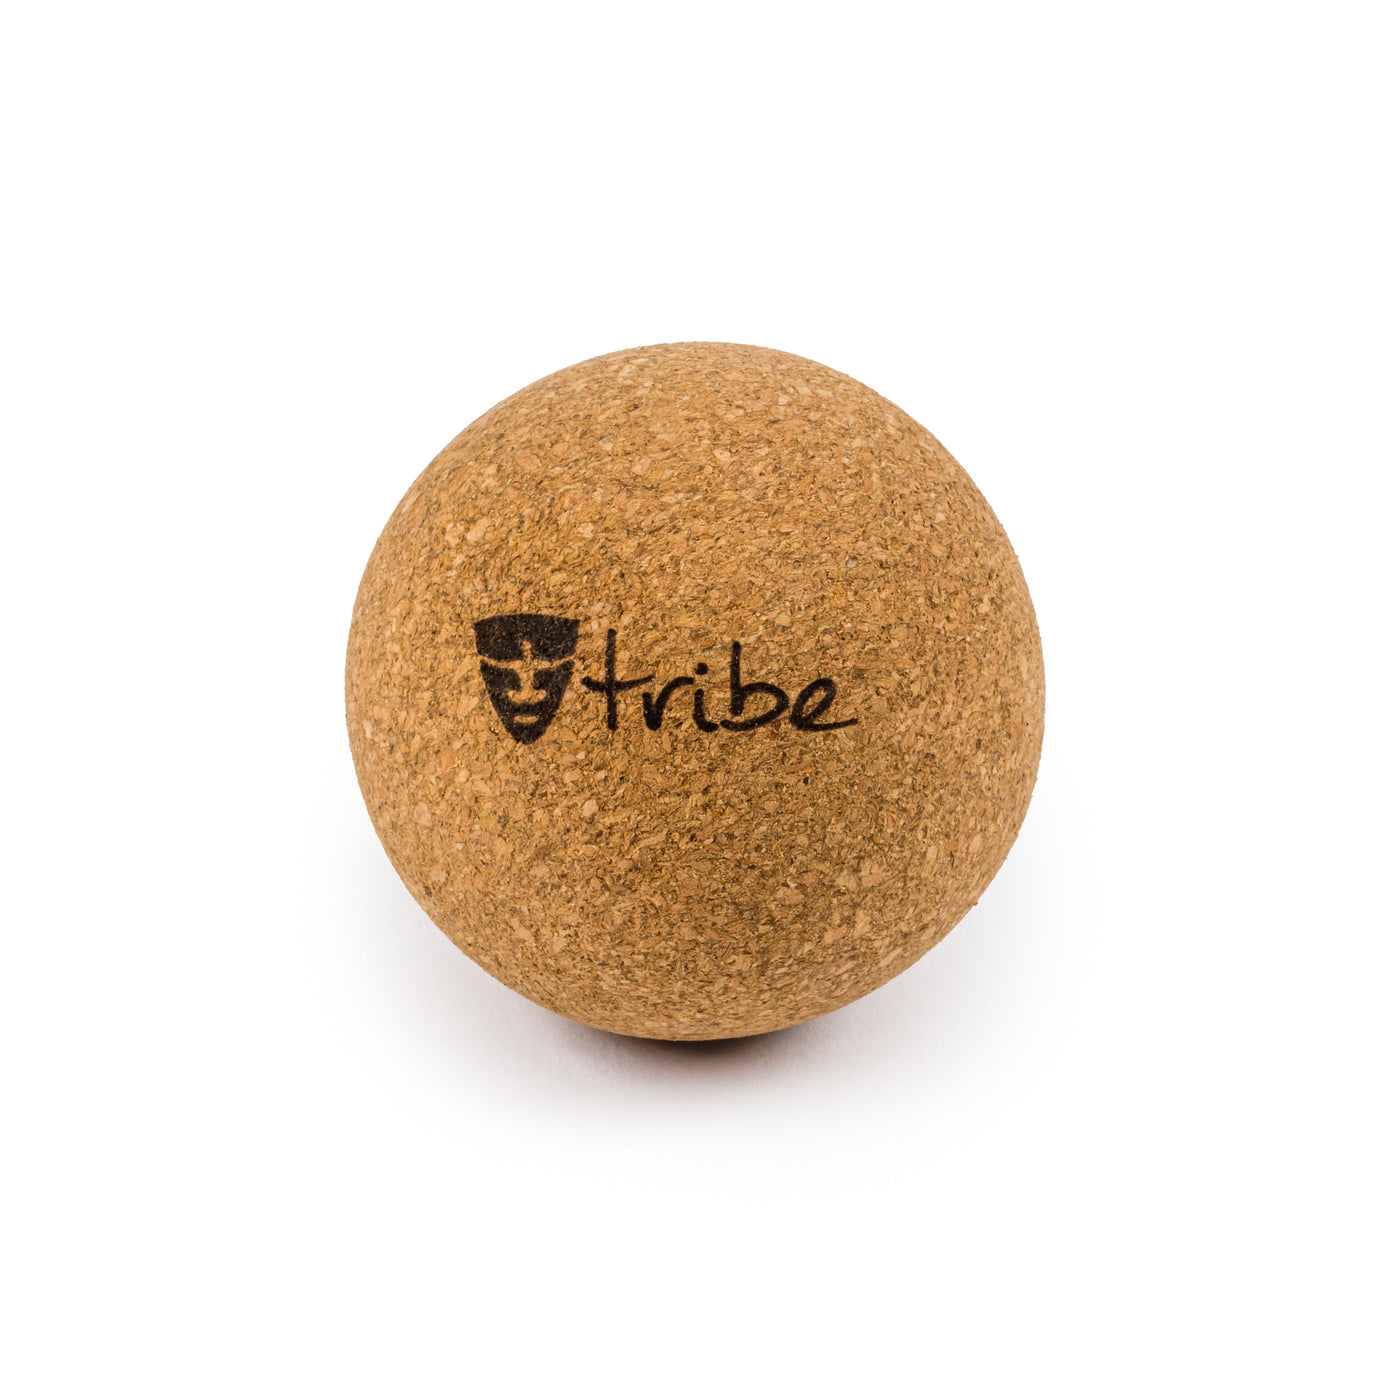 TRIBE Cork Massage Ball - logo showing | Eco Yoga Store